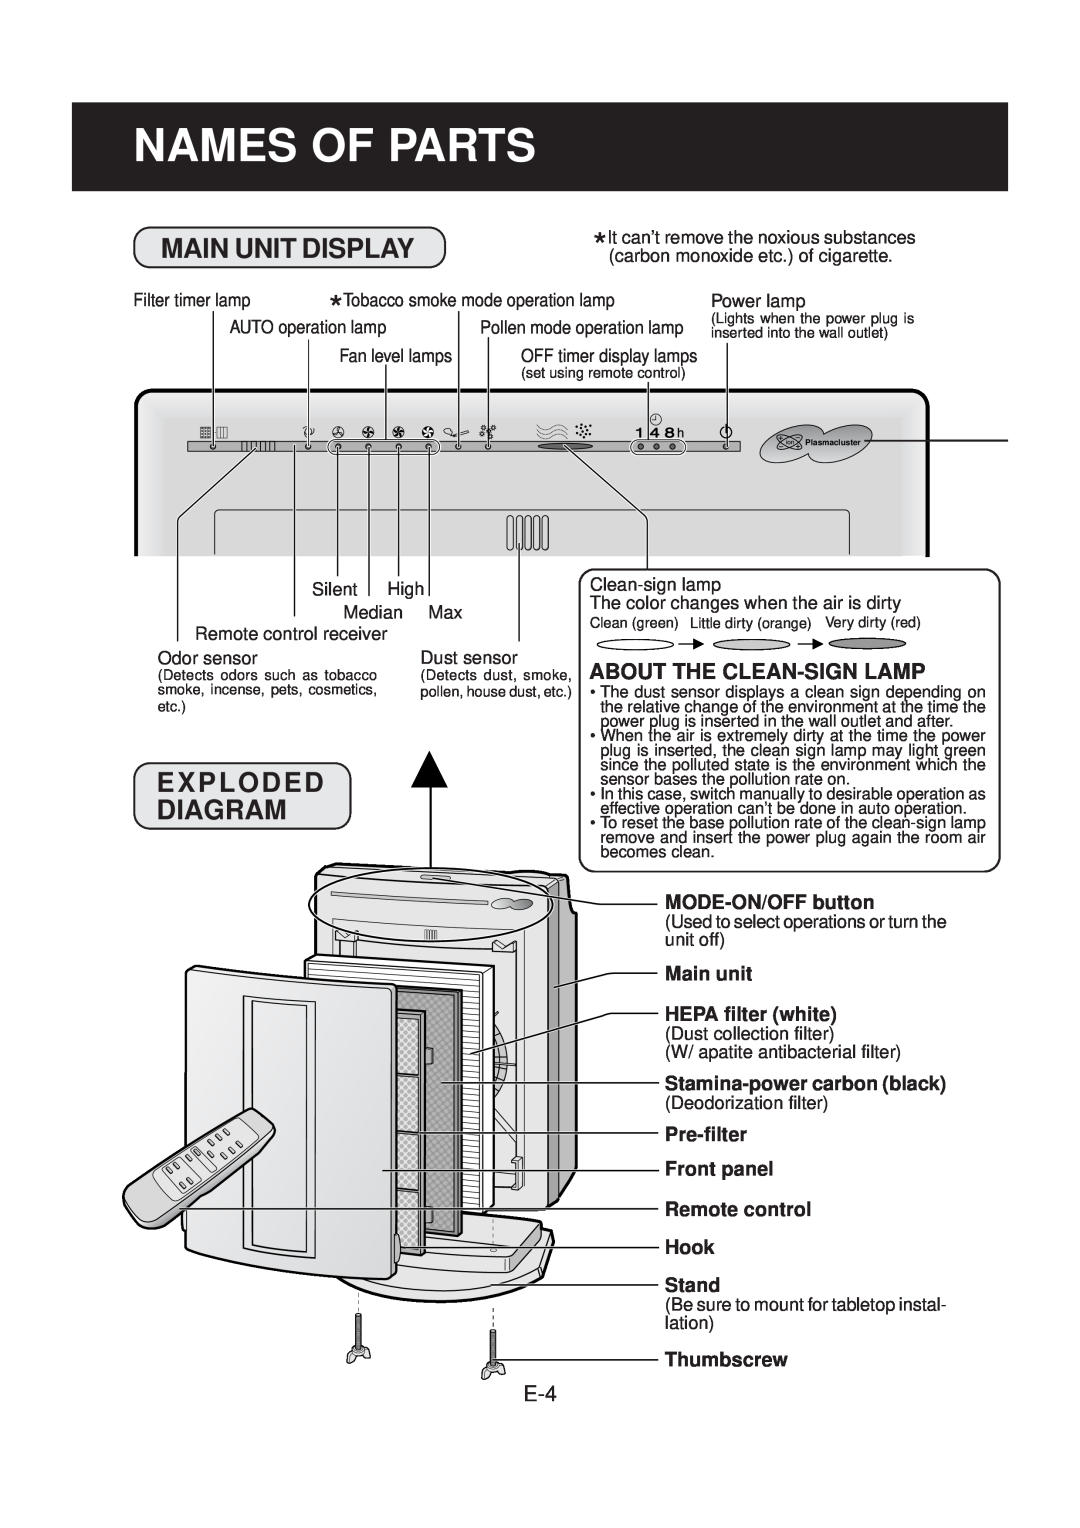 Sharp FU-40SE operation manual Names Of Parts, Main Unit Display, Exploded, Diagram 